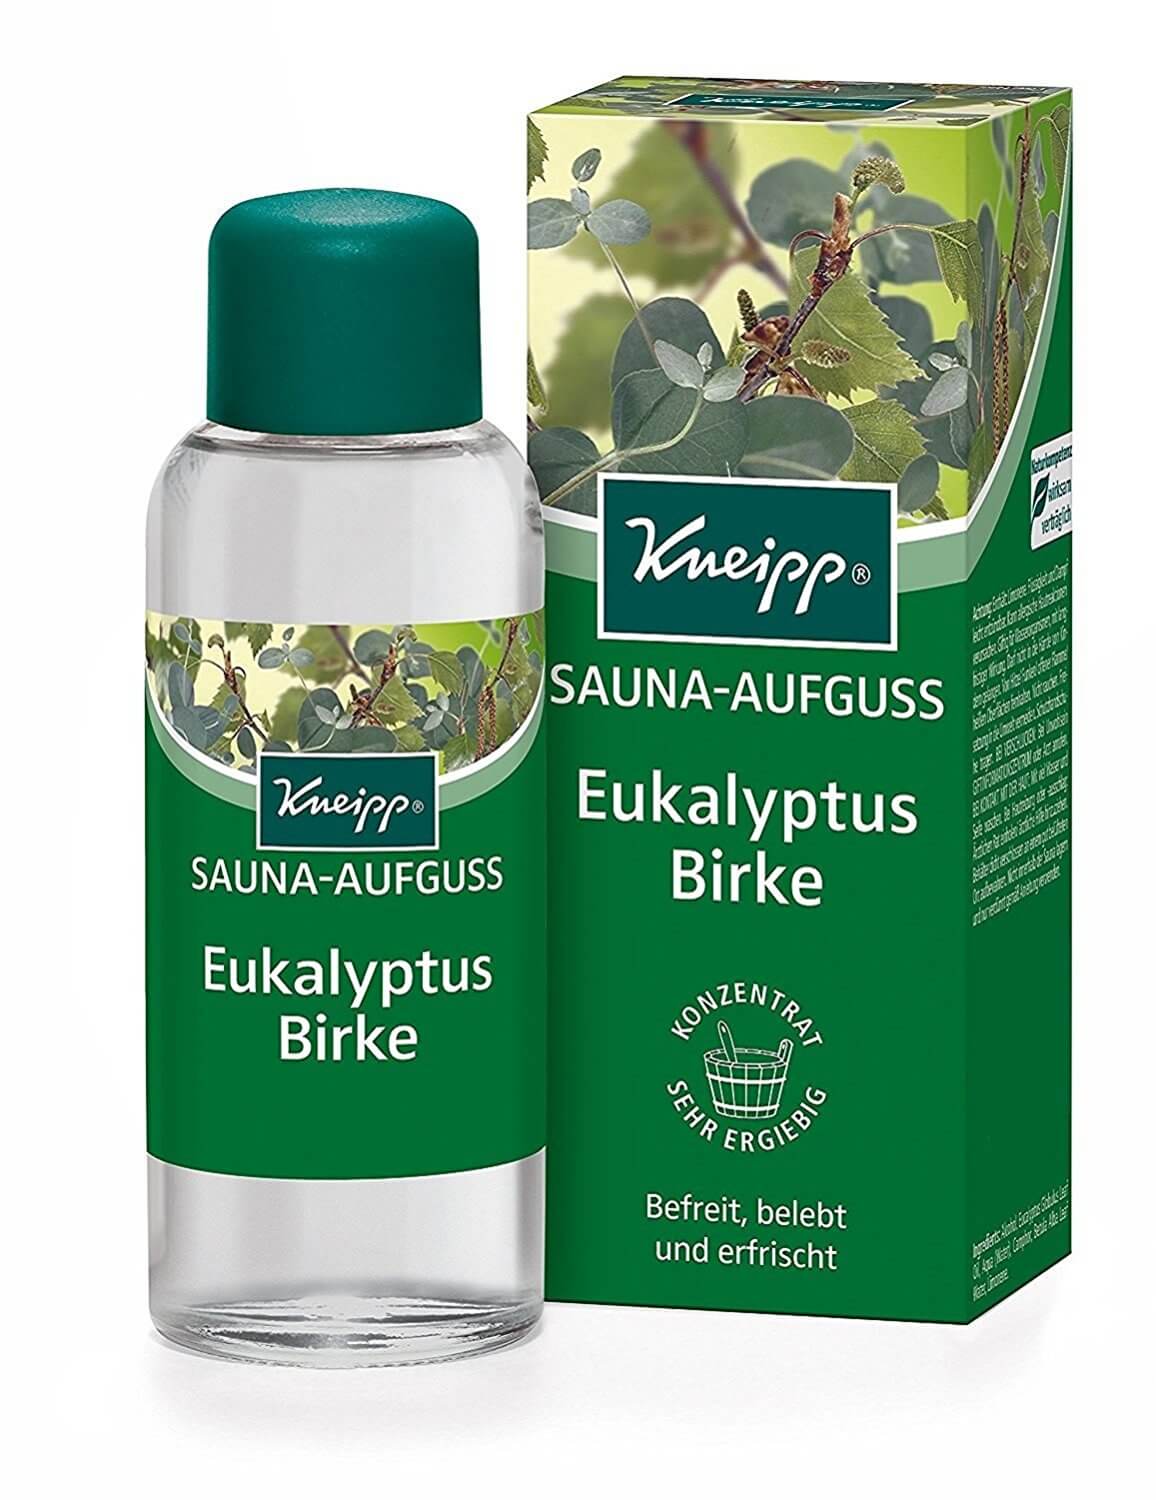 Kneipp Sauna Aufguss & Saunaöle Eukalyptus und Birke